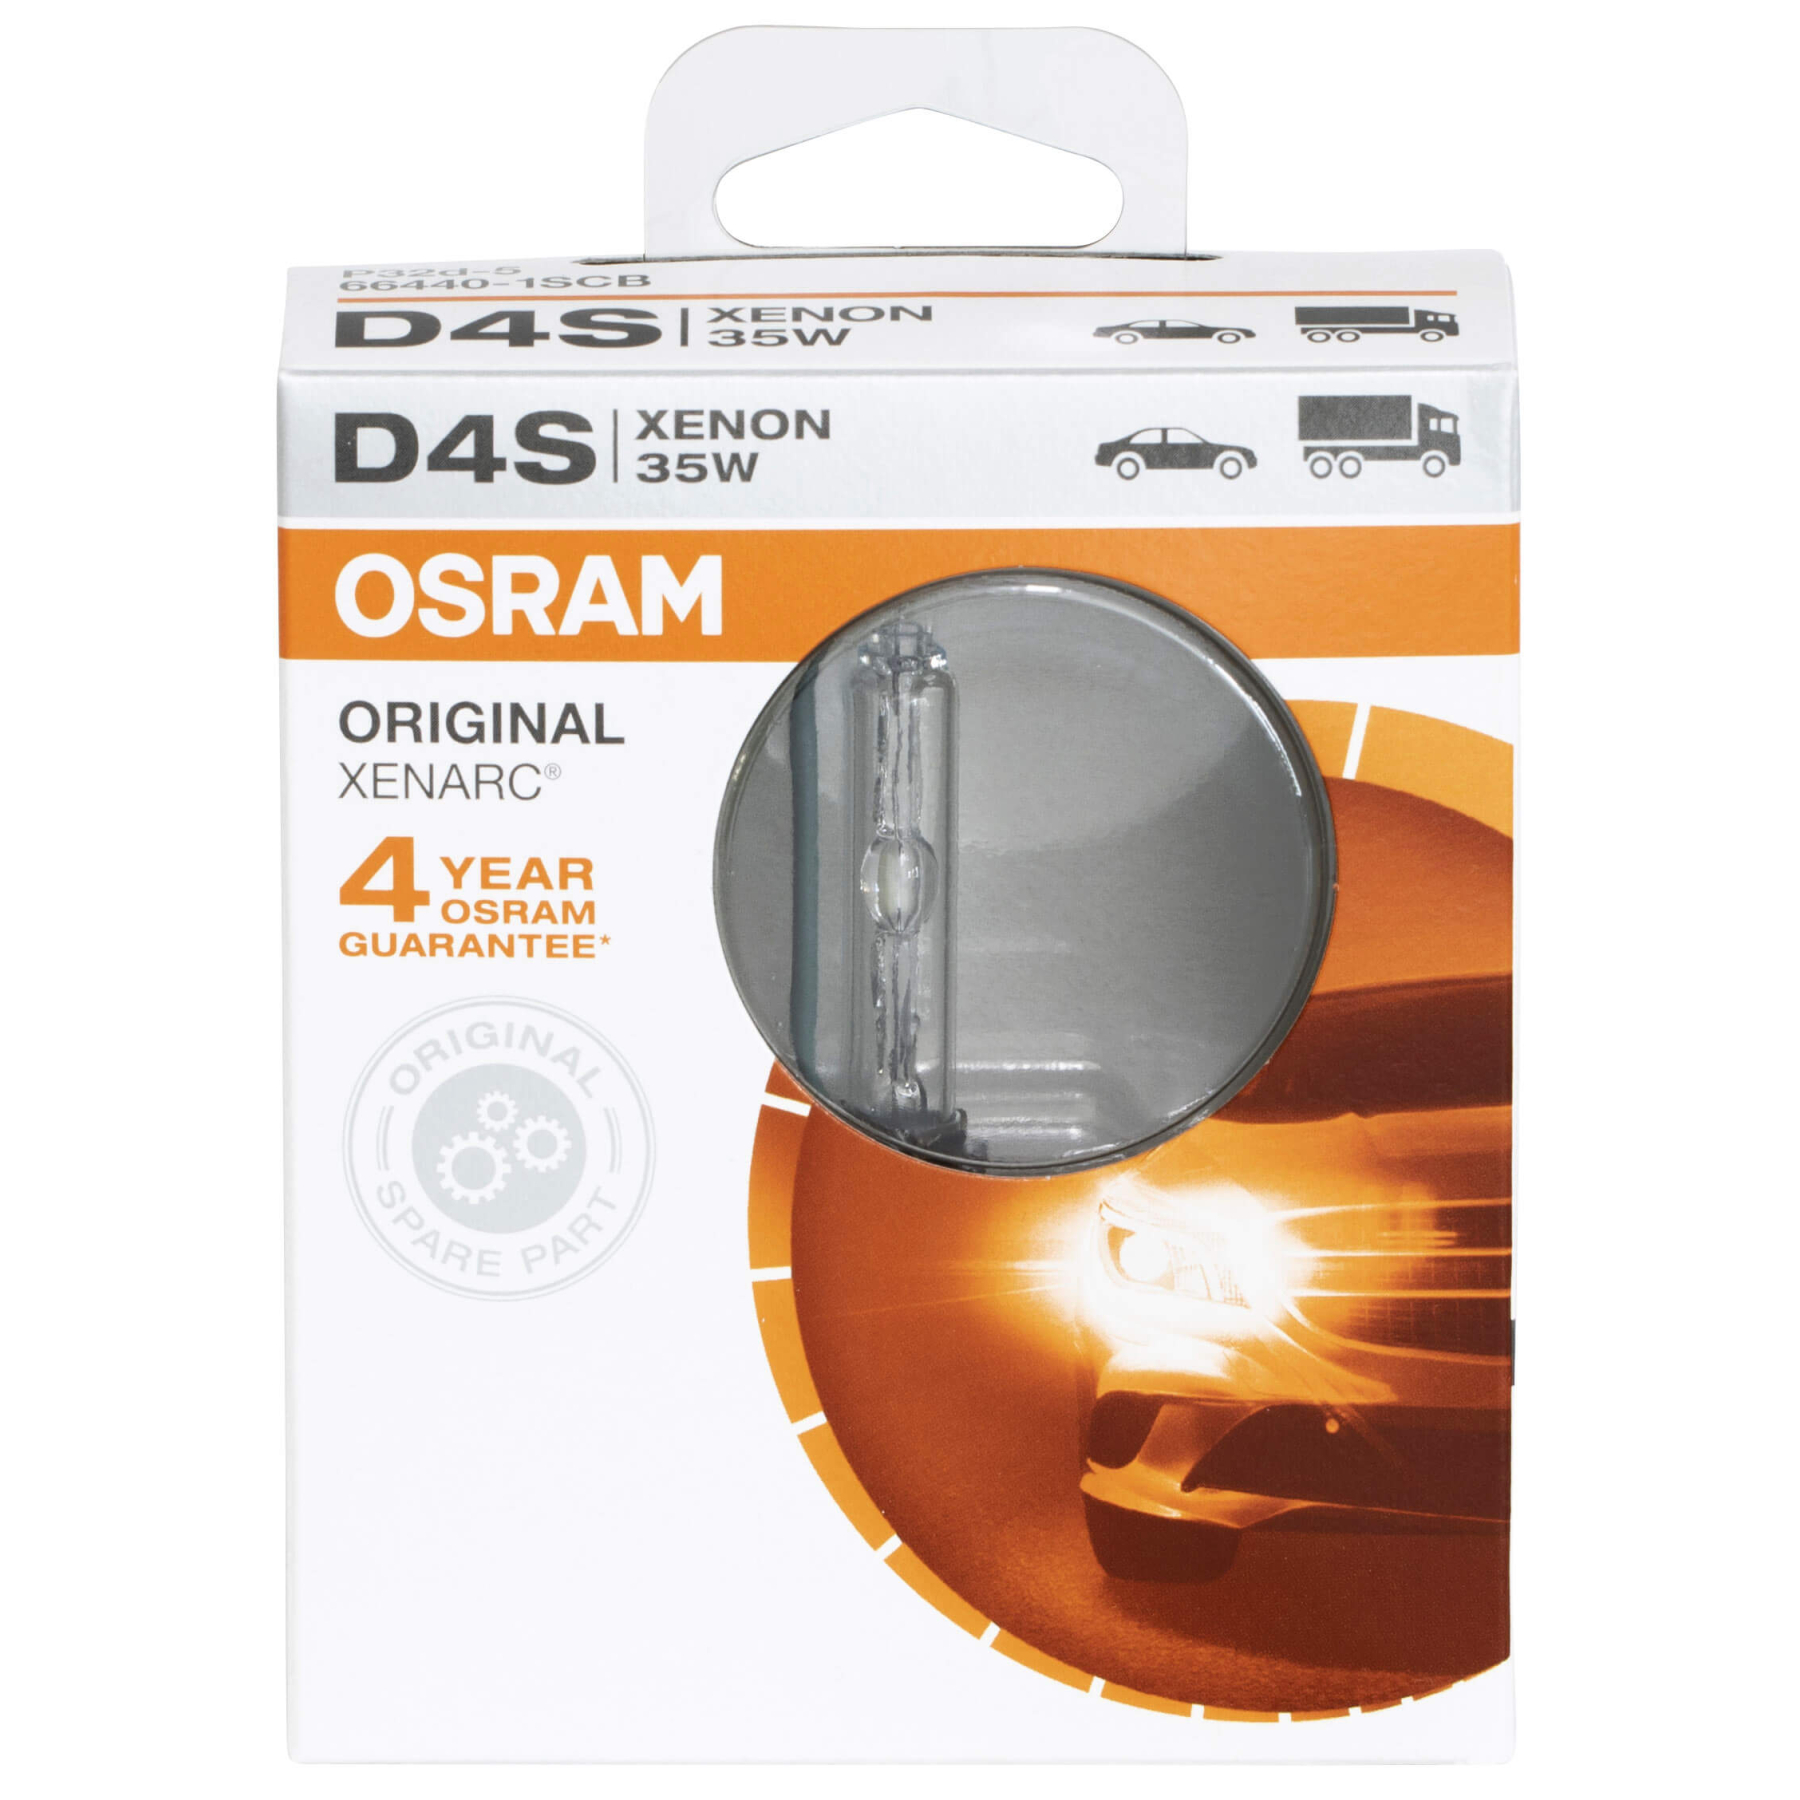 https://electronicx.de/media/image/product/3154/lg/osram-xenarc-original-d4s-hid-xenon-brenner-oem-66440-1scb-softcover-box-1-lampe.jpg